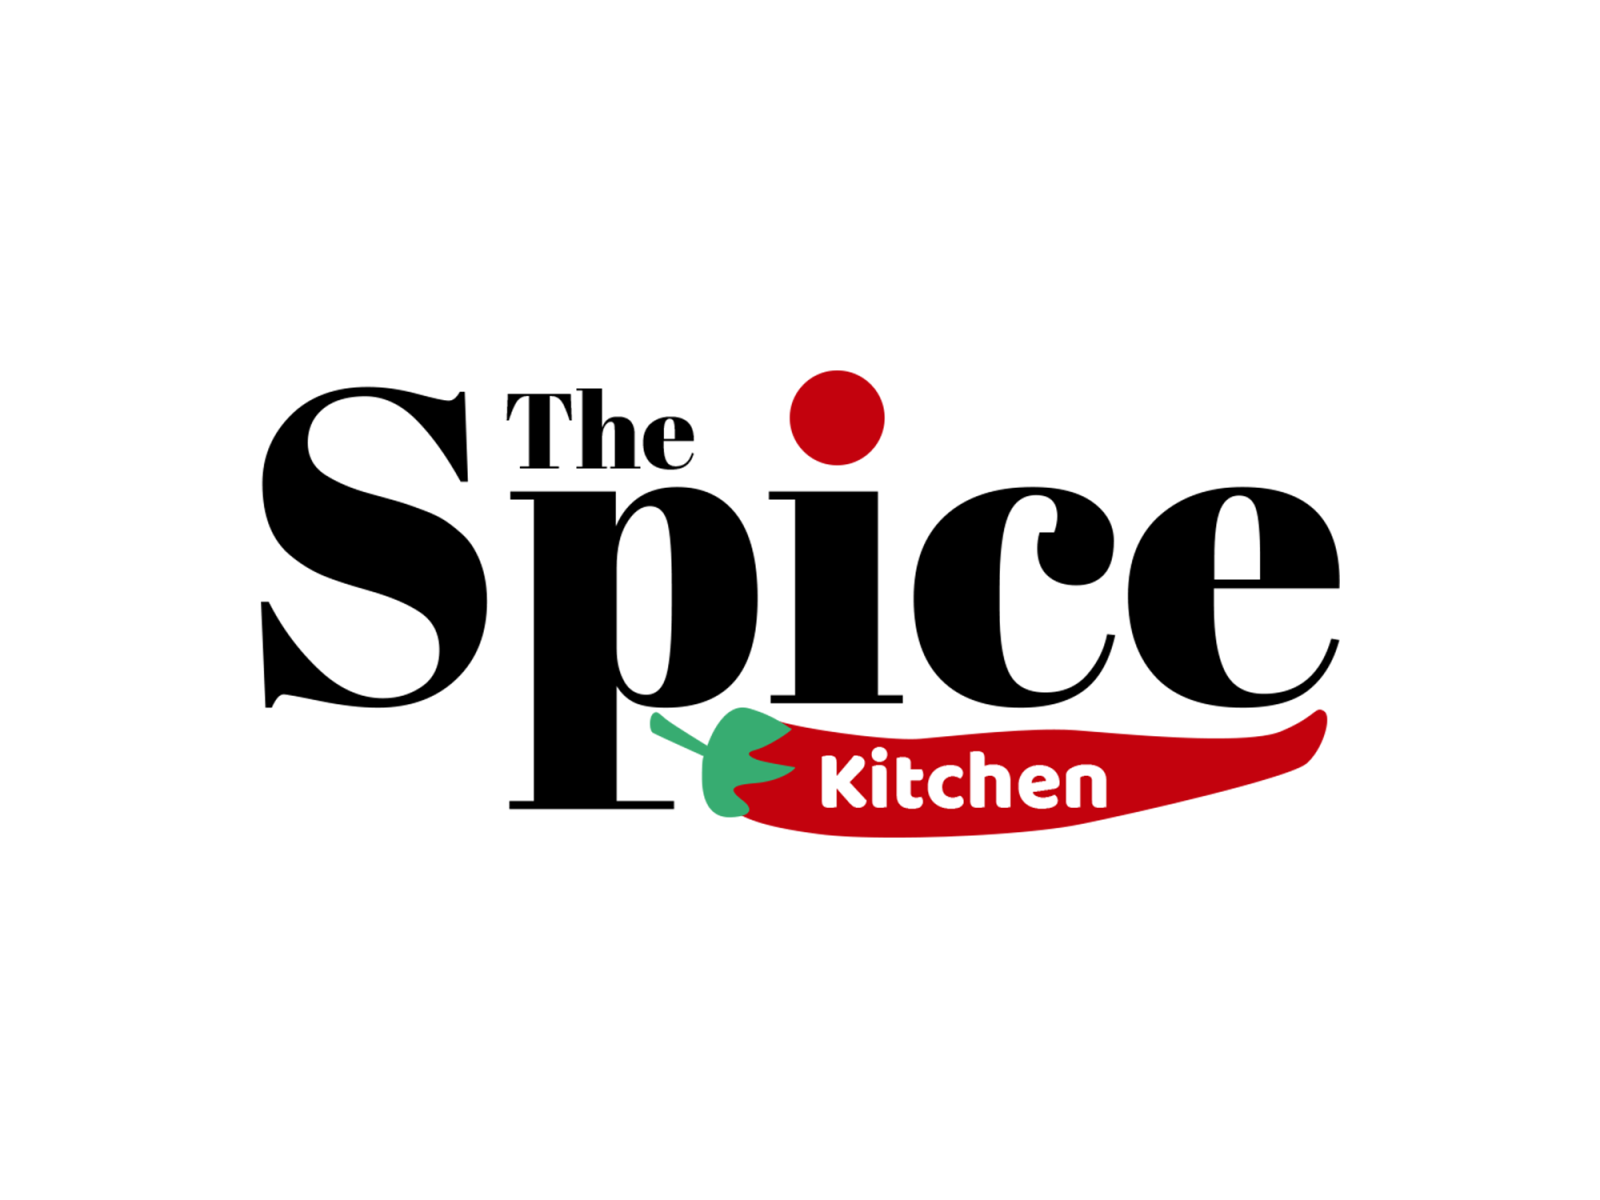 Logo Design | Chili logo | Spice logo by Mr. Khaled on Dribbble